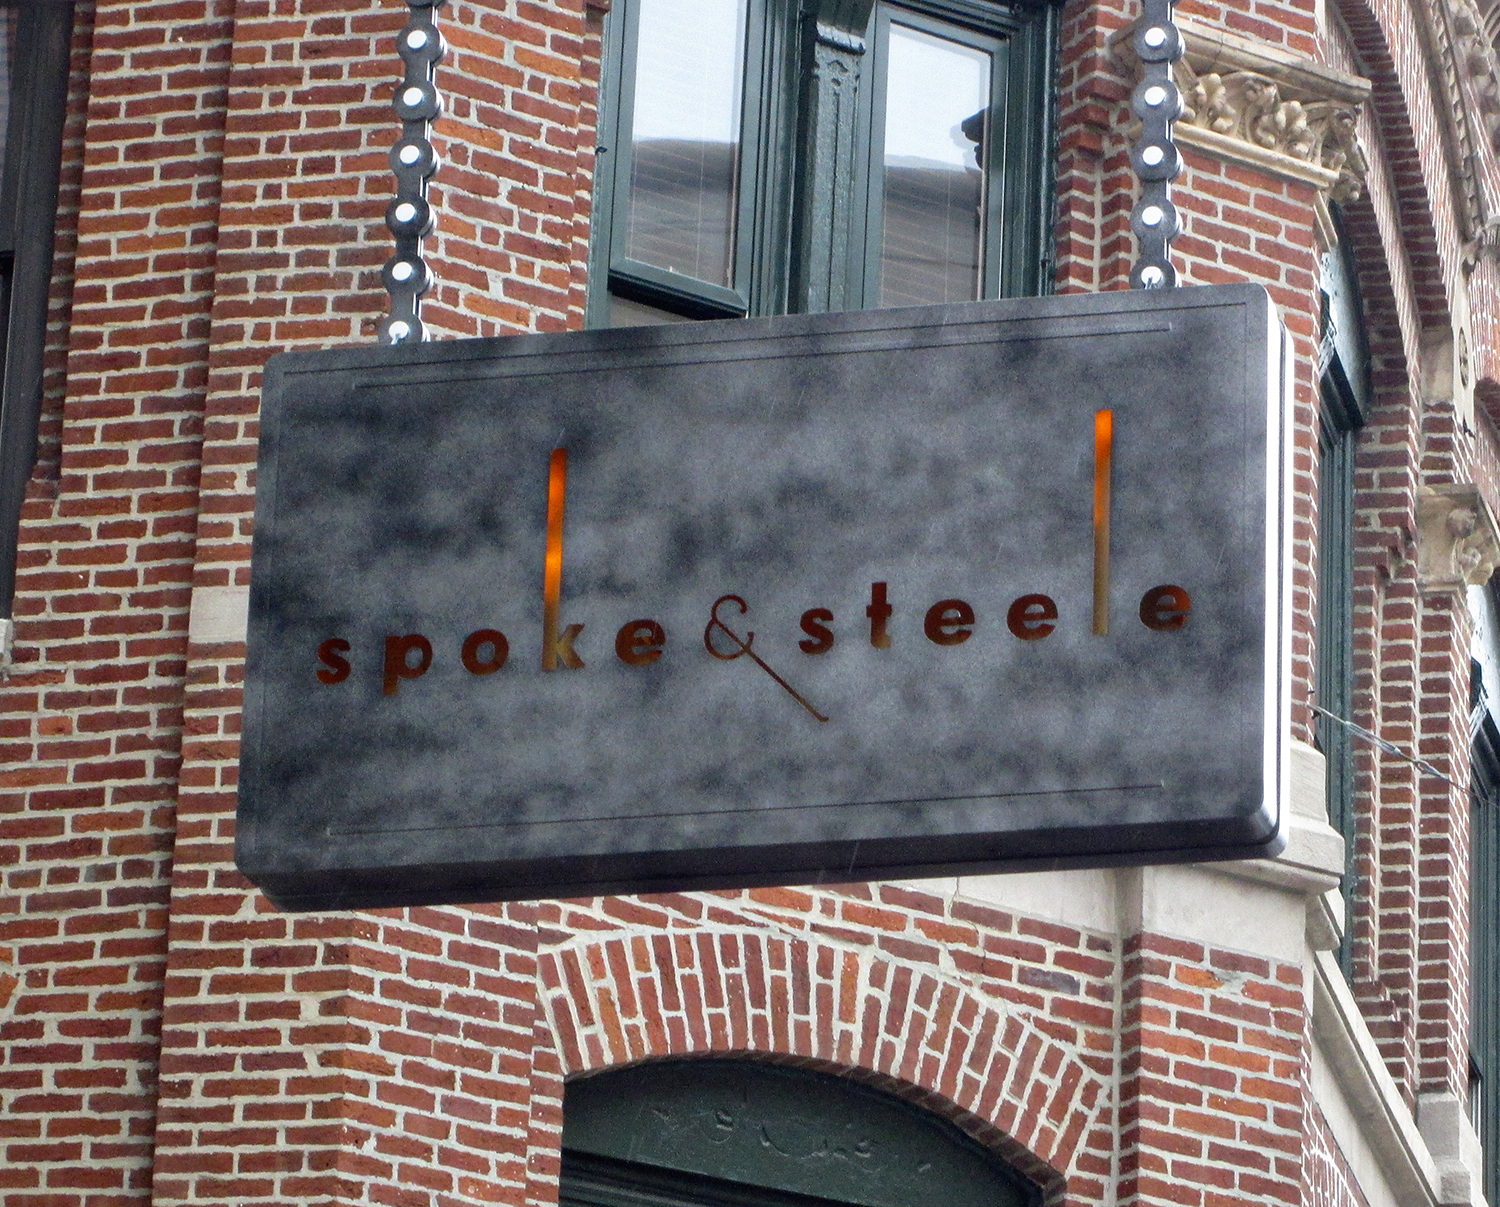 Spoke & Steele Restaurant Sign